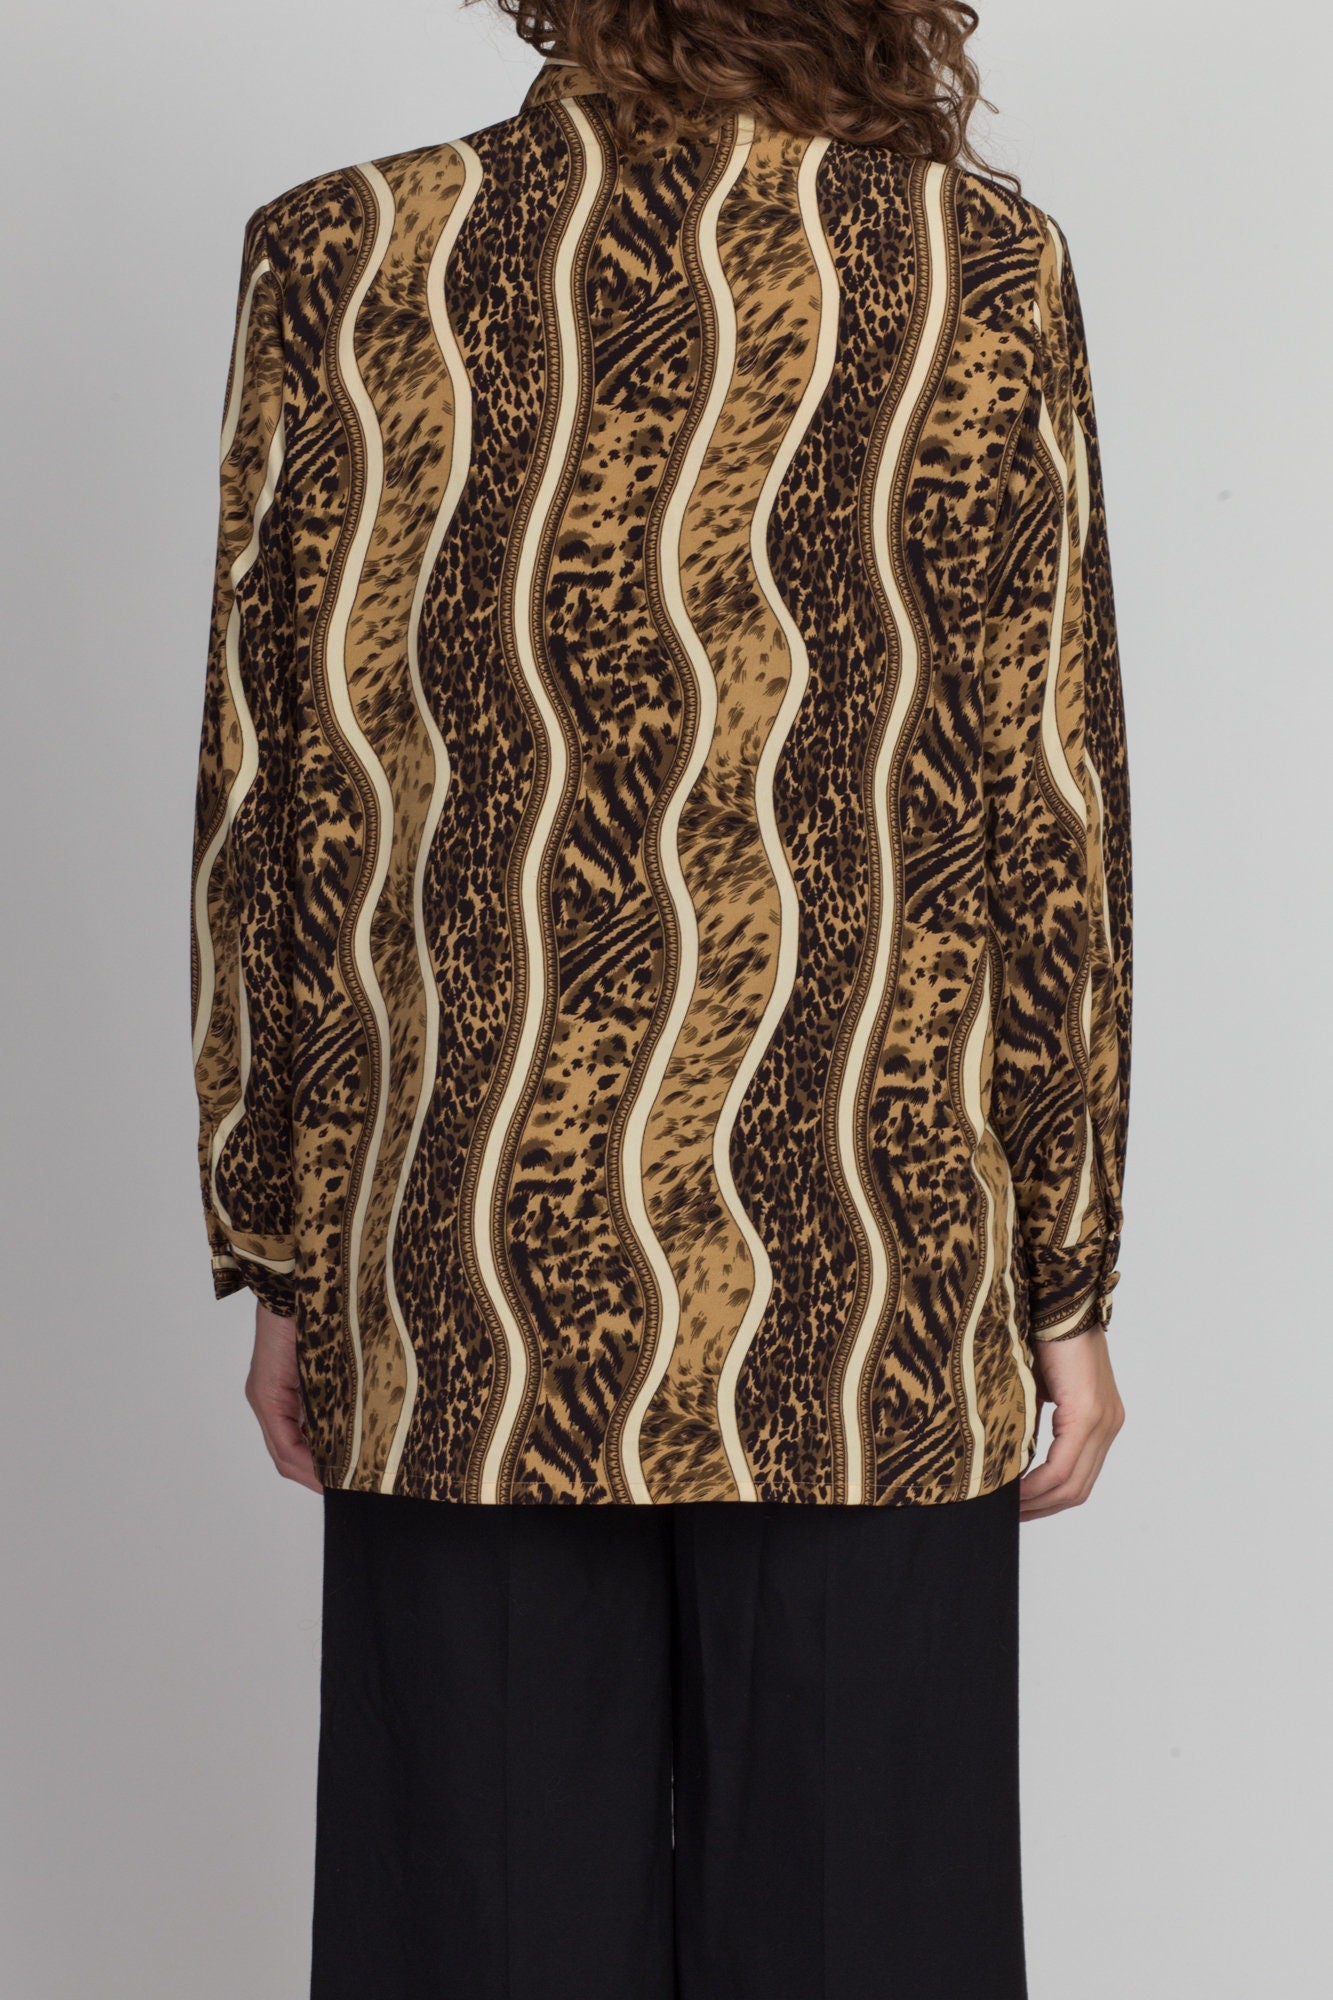 80s Wavy Striped Leopard Print Oversize Blouse - Medium 